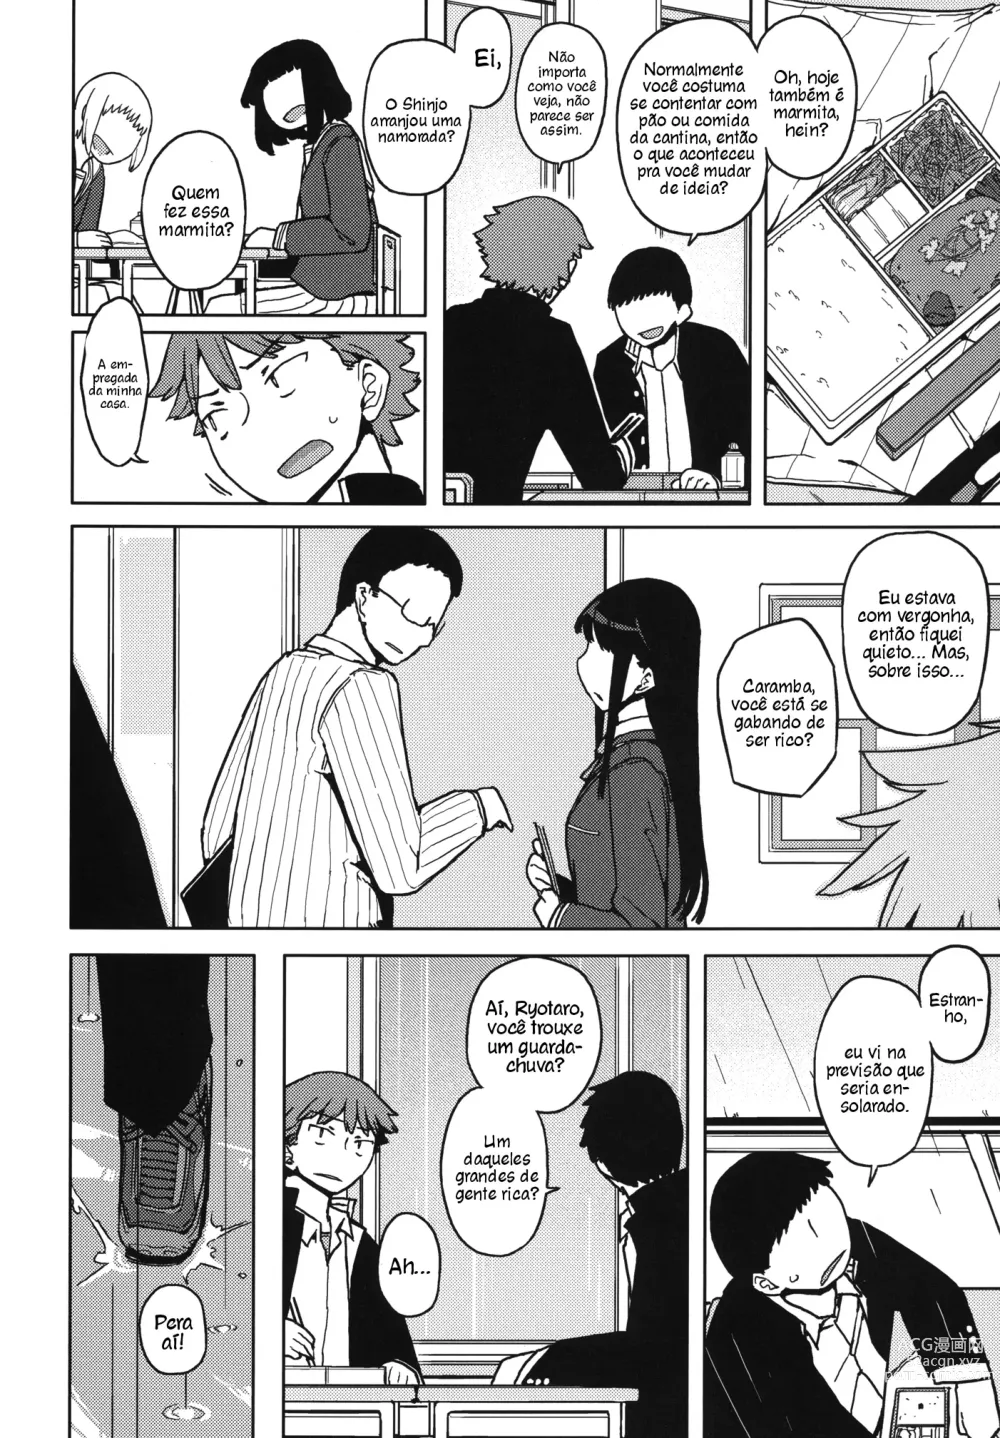 Page 20 of doujinshi TS: Quando Ele se tornou Ela